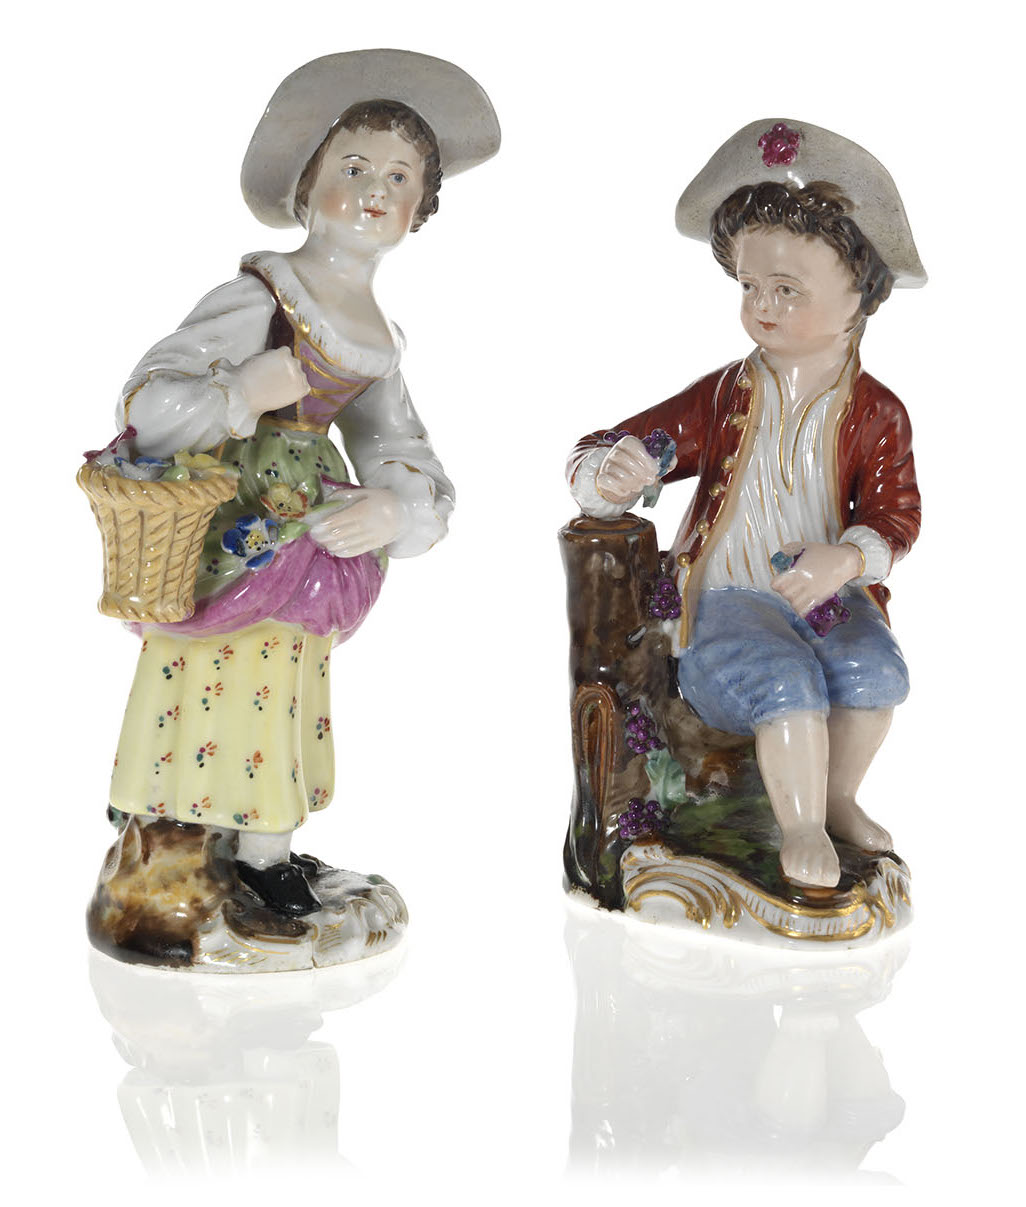 Two Porcelain Figurines of Children Gardeners